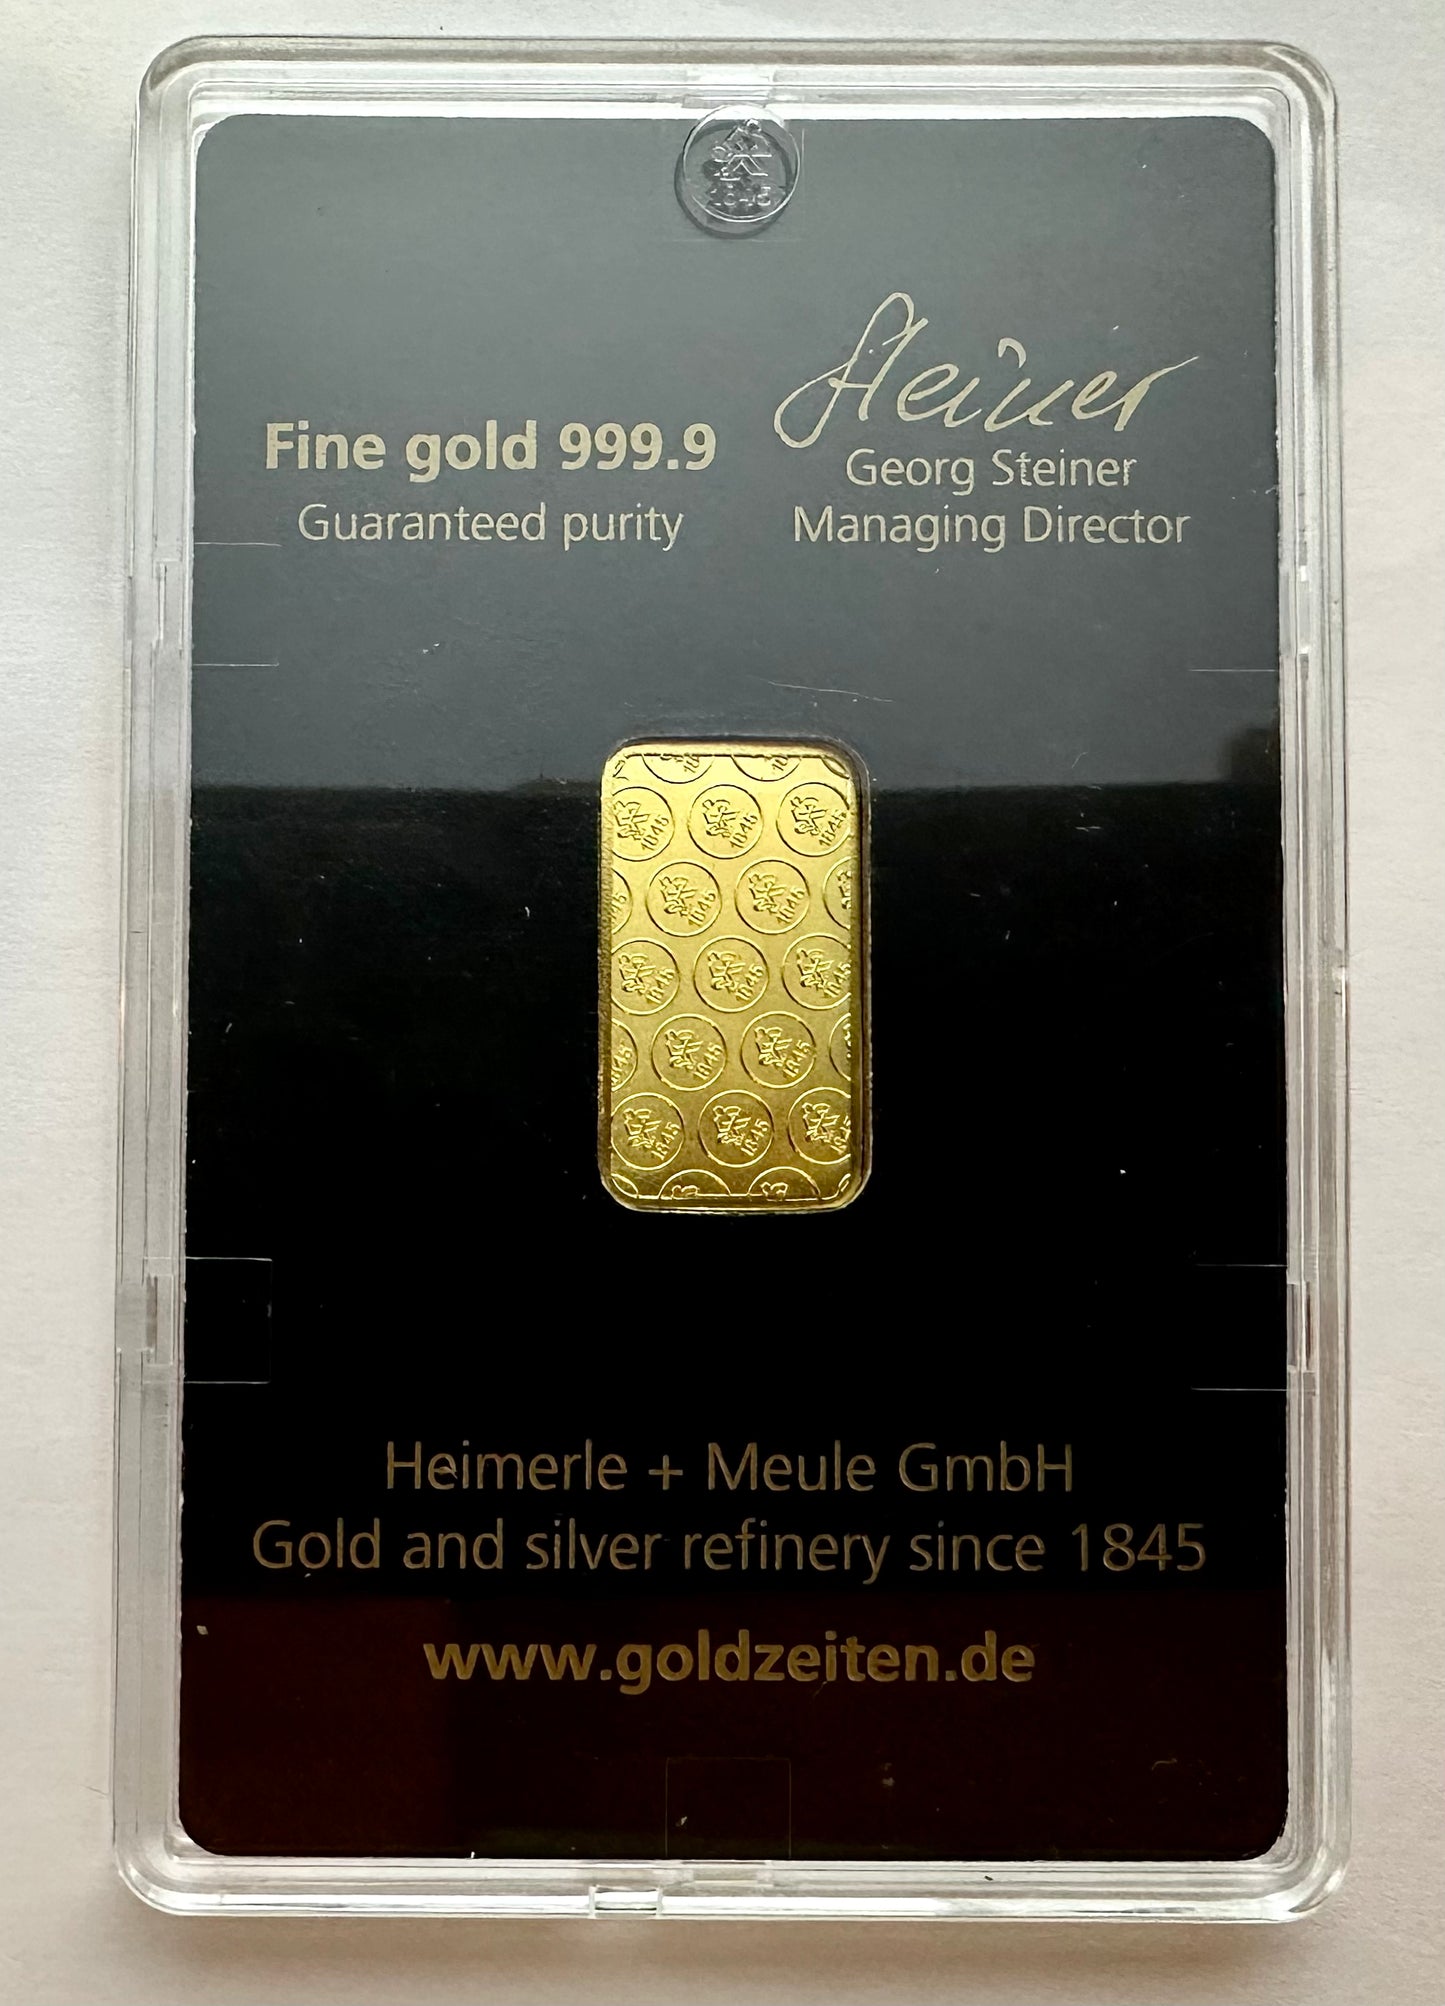 Heimerle+Meule 5 Gram Gold Bar